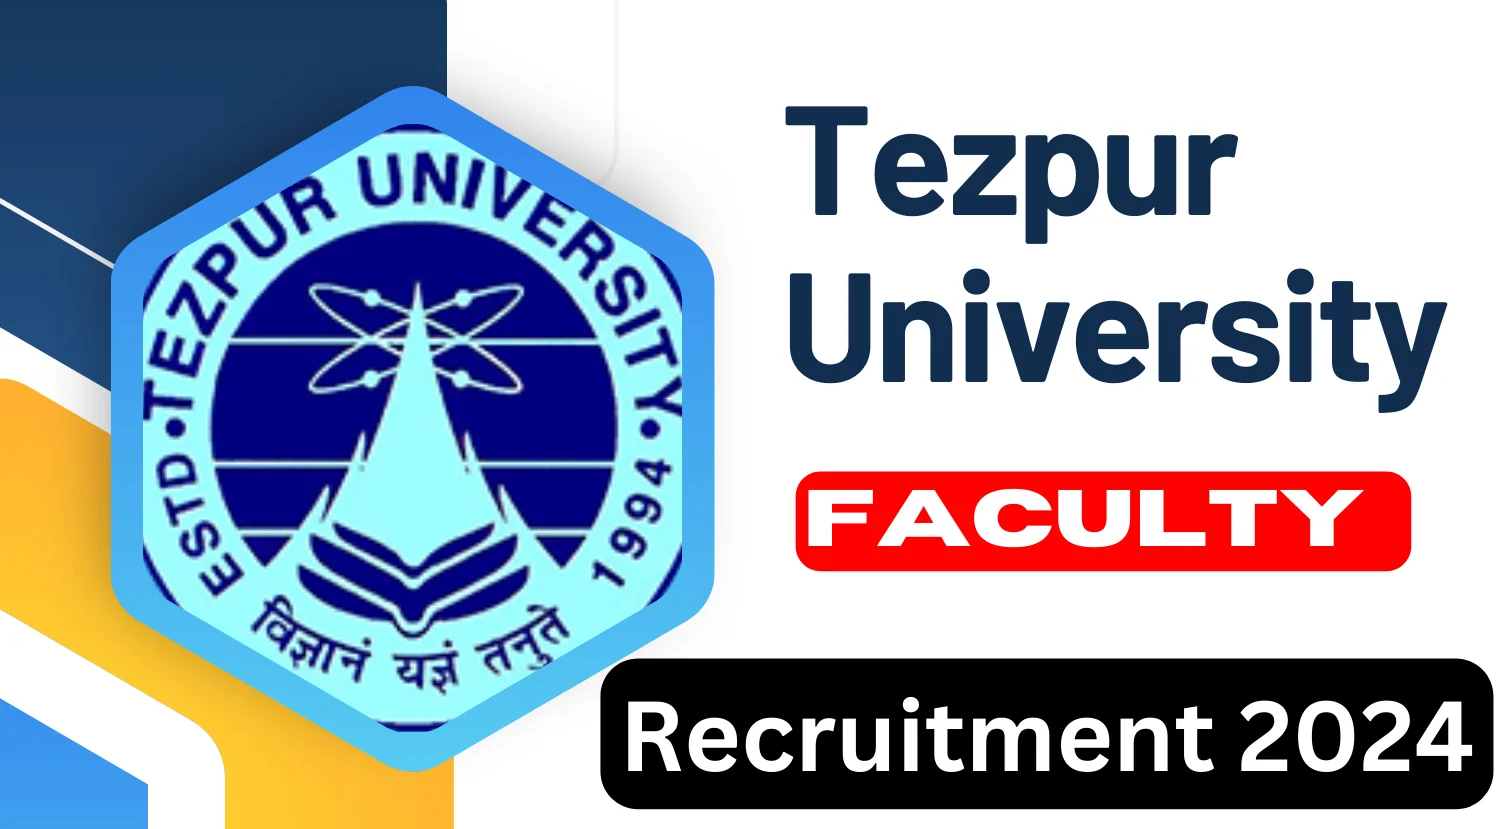 Tezpur University Recruitment 2024 for Faculty Vacancies